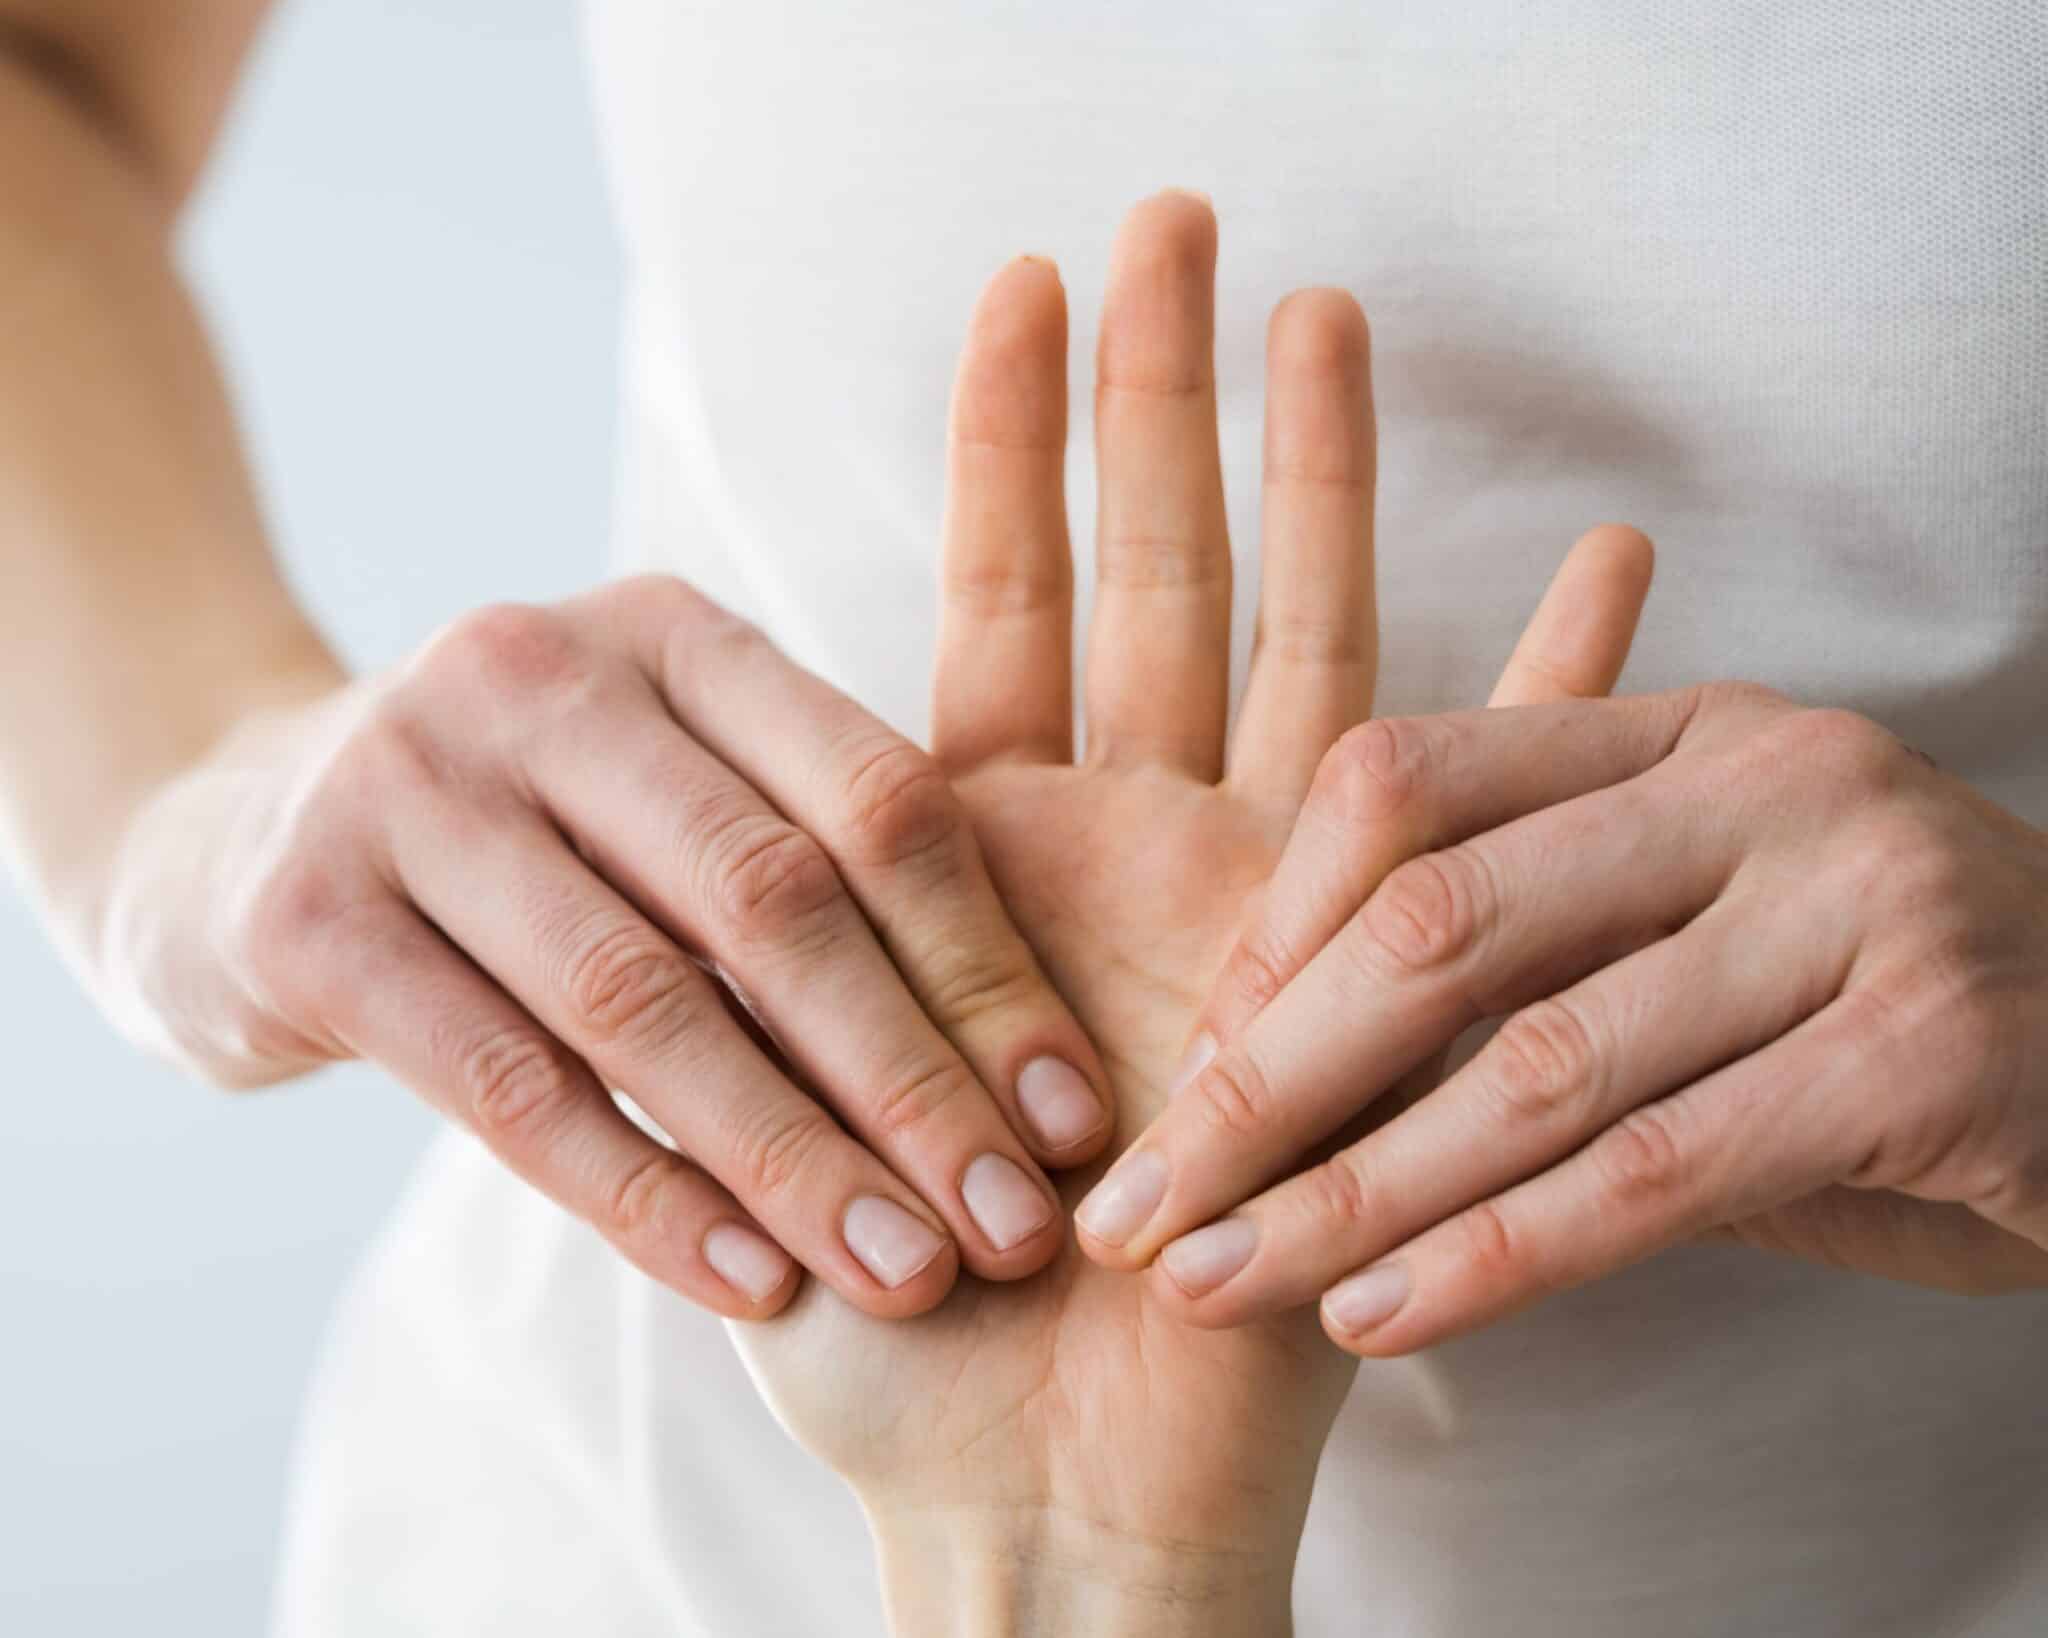 massaging hands for self care